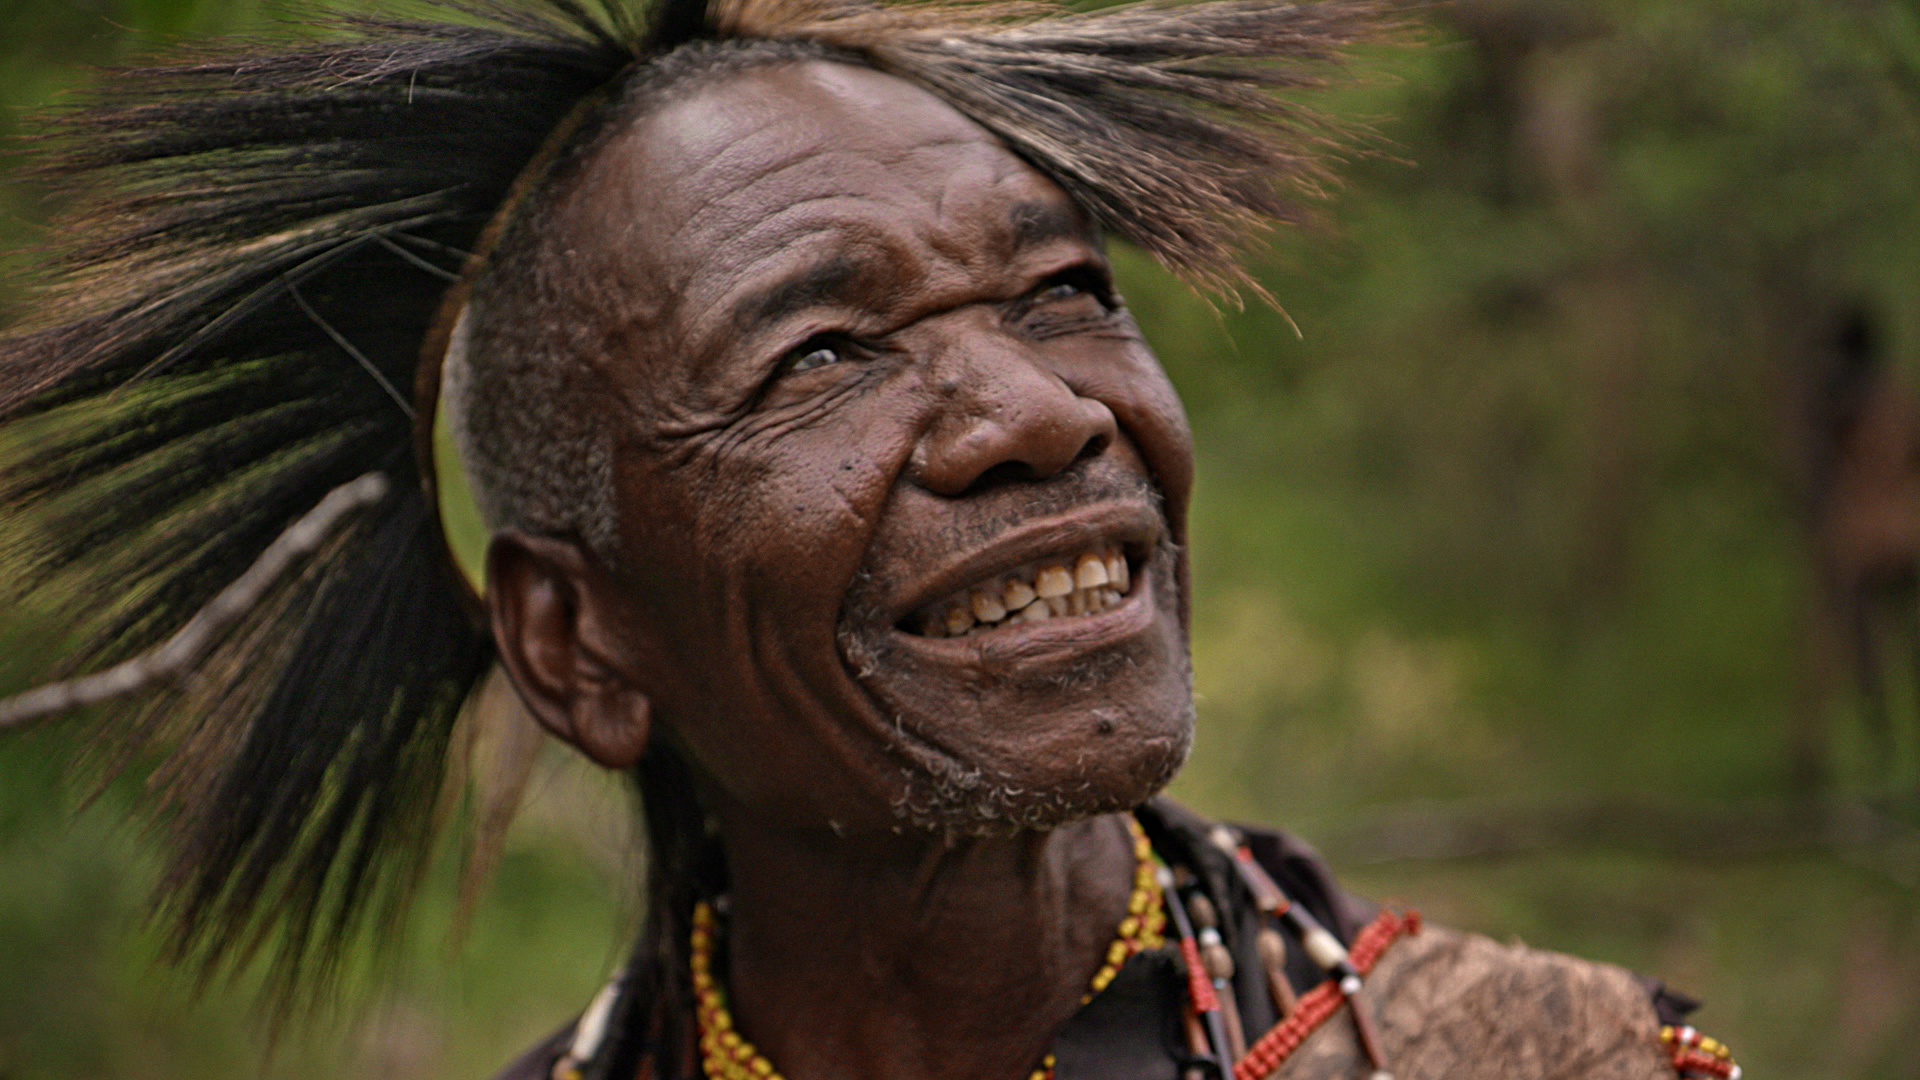 Travelling Photographers - E9 - Tanzania - The Last Hunter-Gatherers